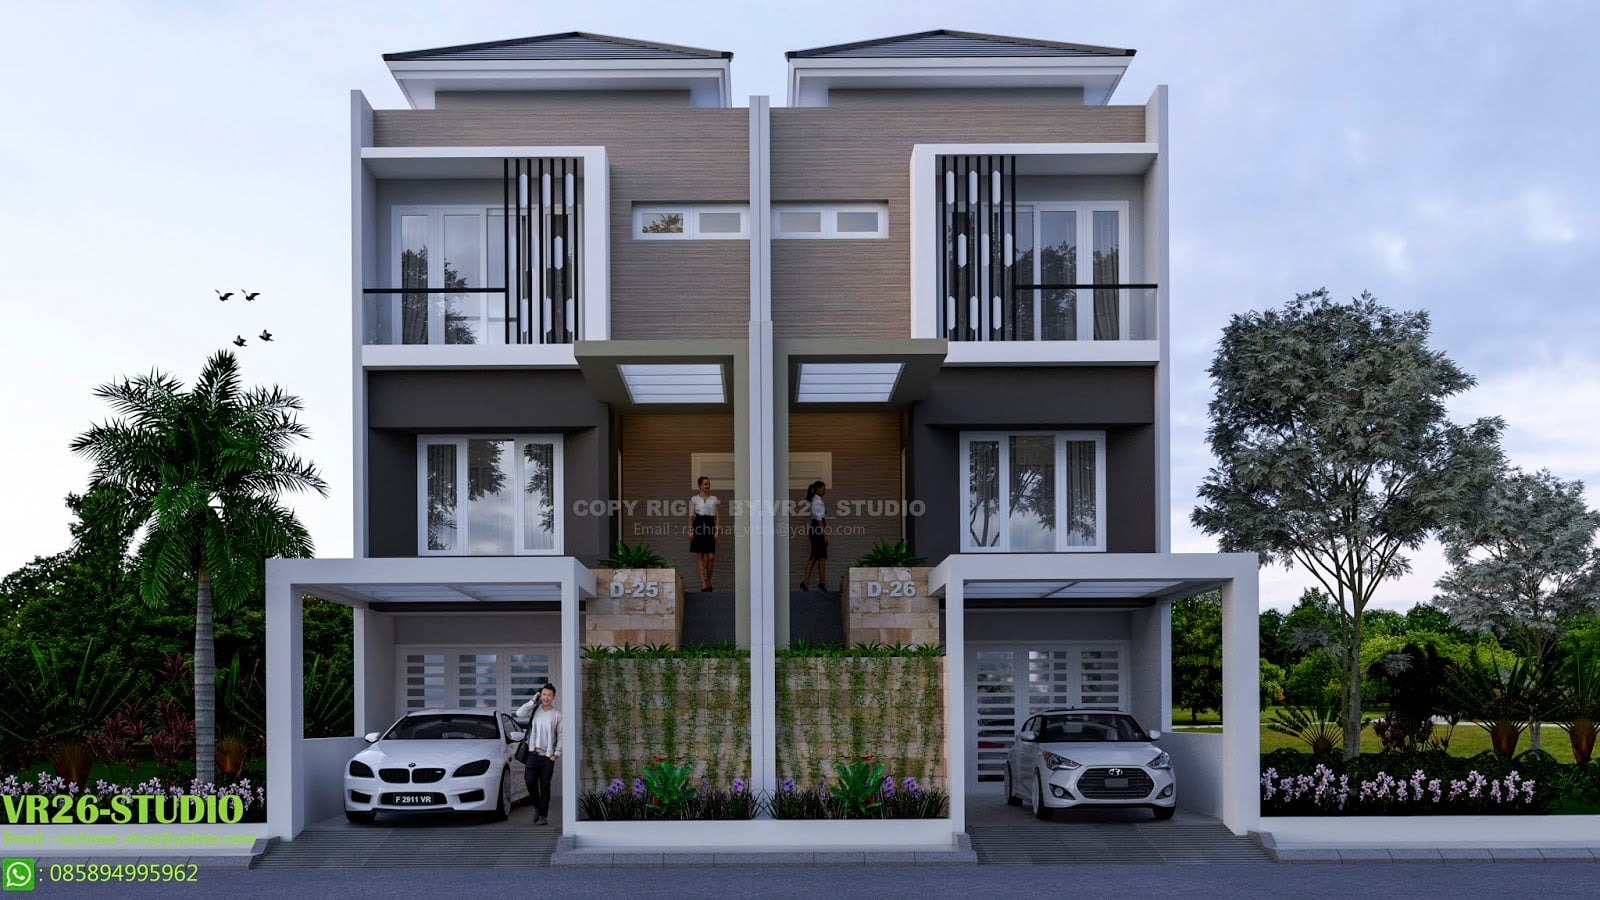 15 Terbaik Gambar Rumah Minimalis Modern 3 Lantai Paling Terkenal Arcadia Design Architect